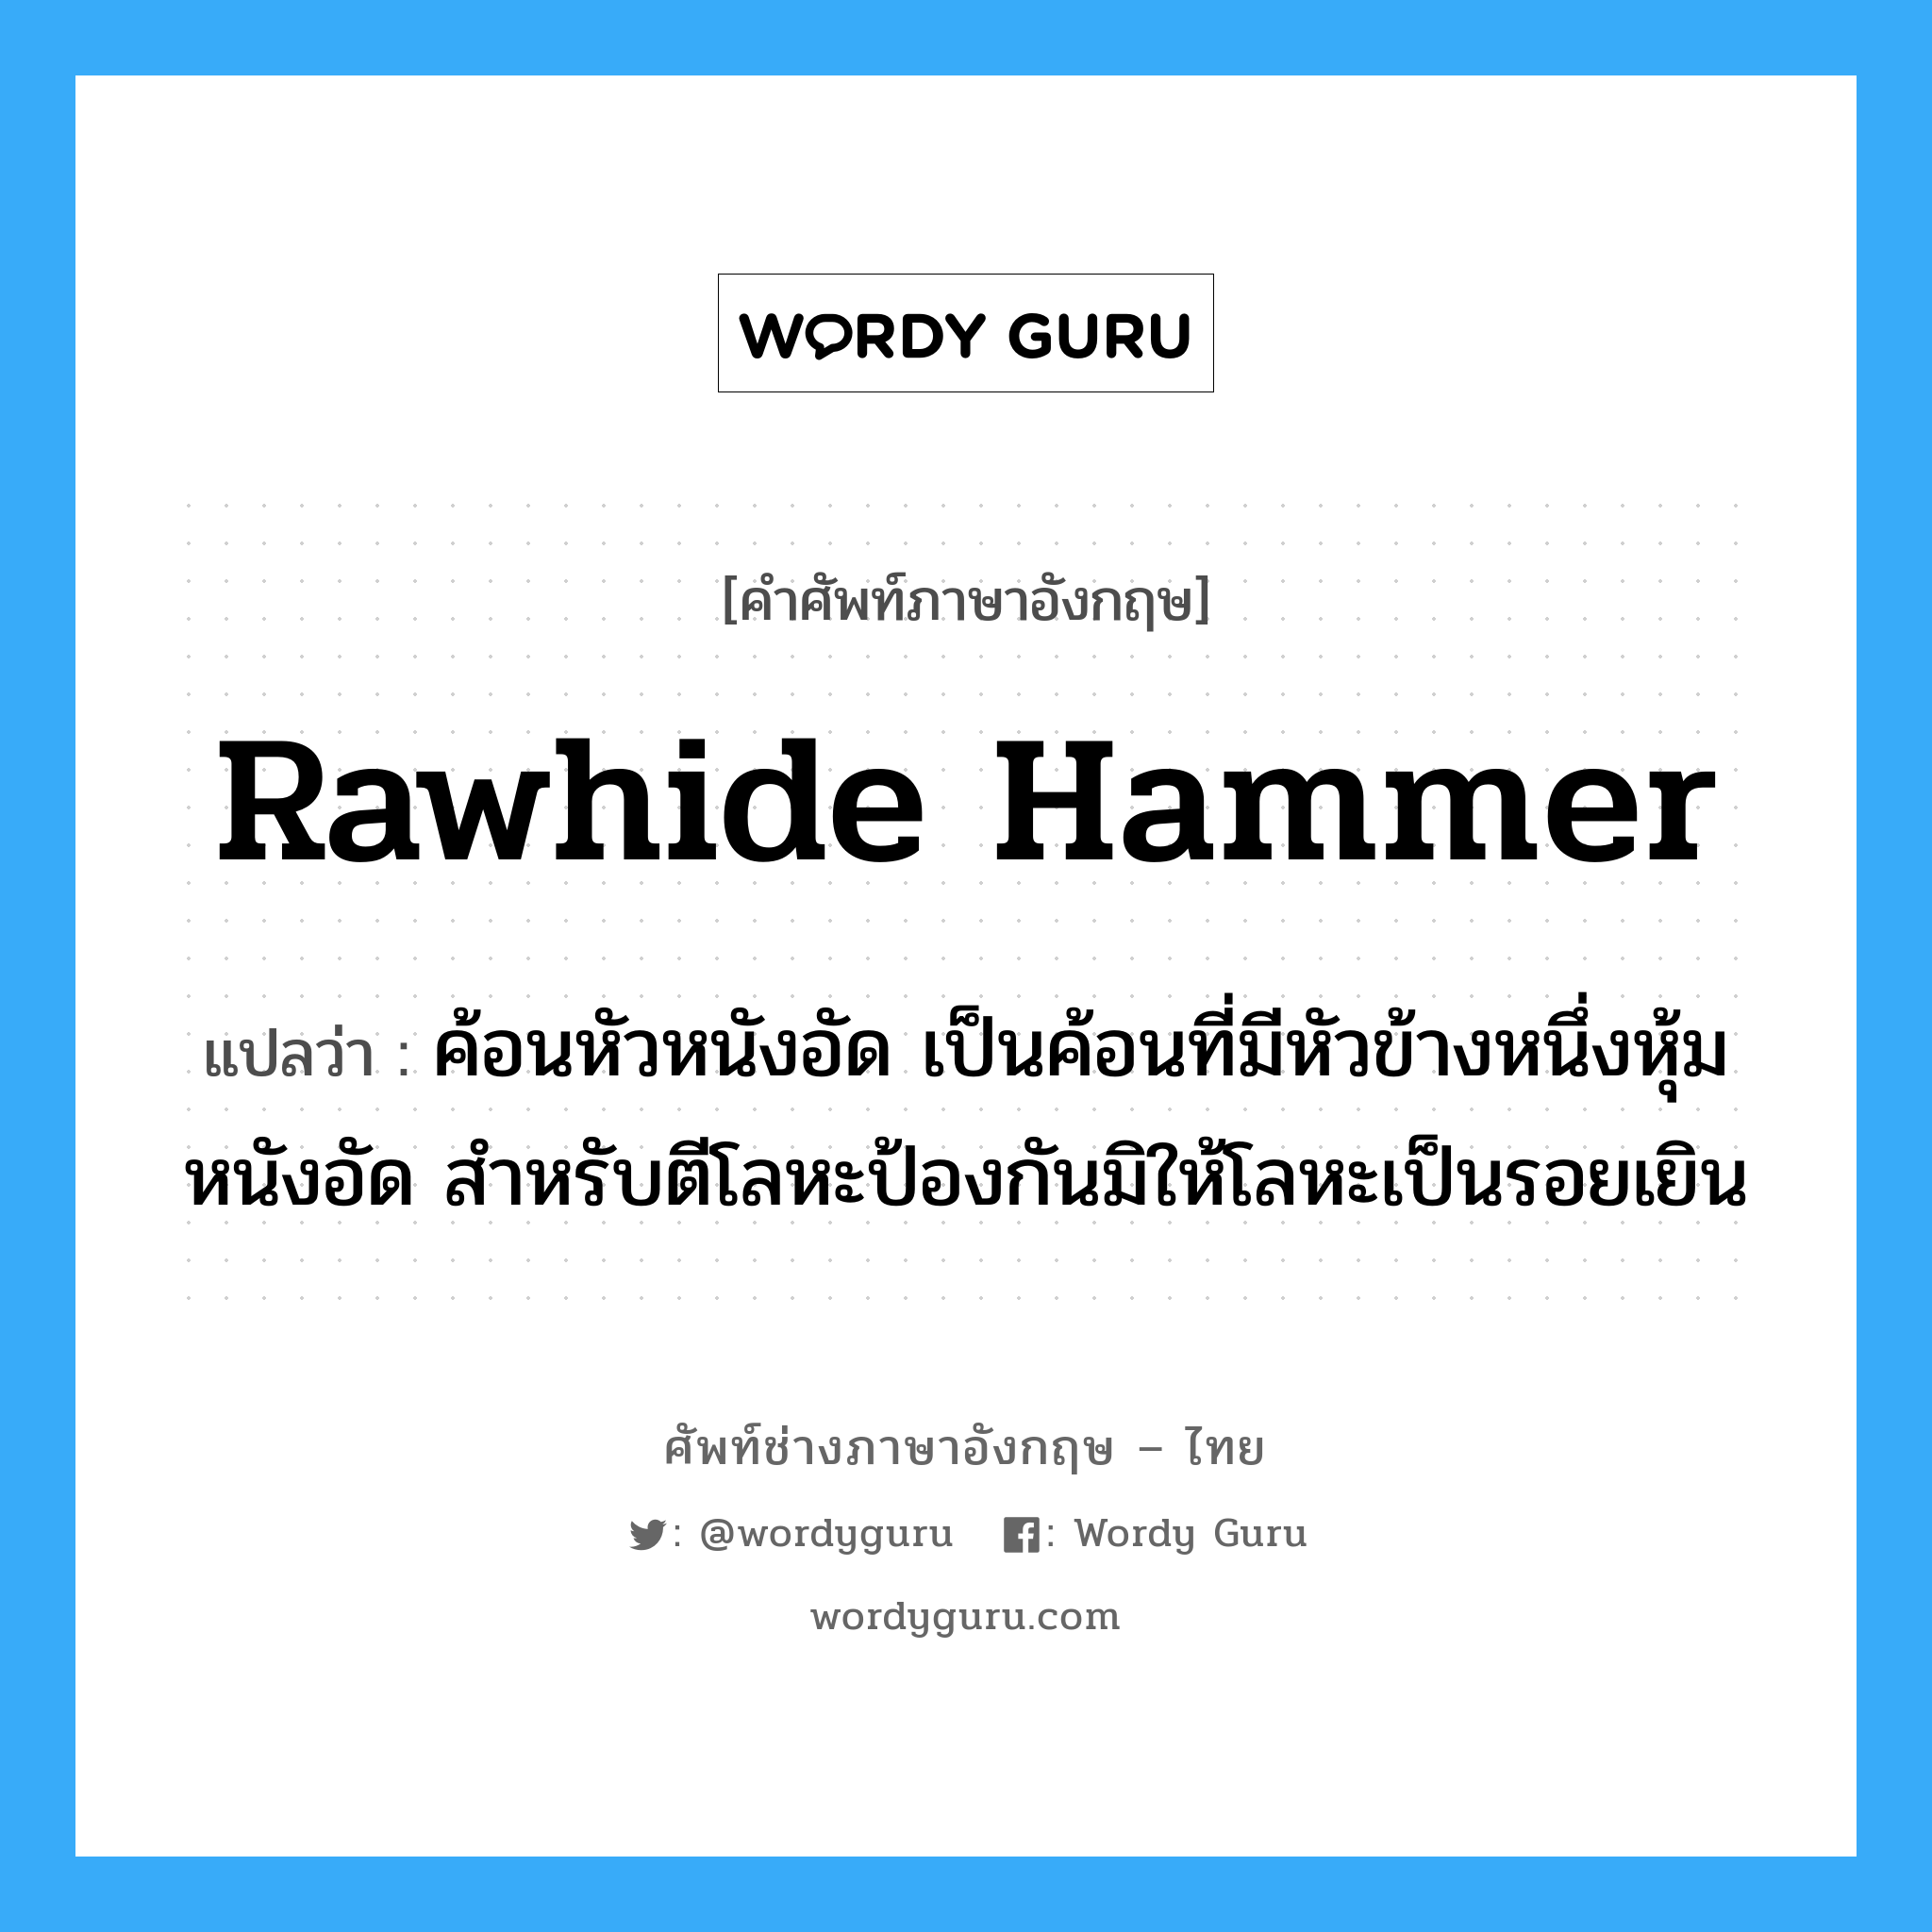 rawhide hammer แปลว่า?, คำศัพท์ช่างภาษาอังกฤษ - ไทย rawhide hammer คำศัพท์ภาษาอังกฤษ rawhide hammer แปลว่า ค้อนหัวหนังอัด เป็นค้อนที่มีหัวข้างหนึ่งหุ้มหนังอัด สำหรับตีโลหะป้องกันมิให้โลหะเป็นรอยเยิน